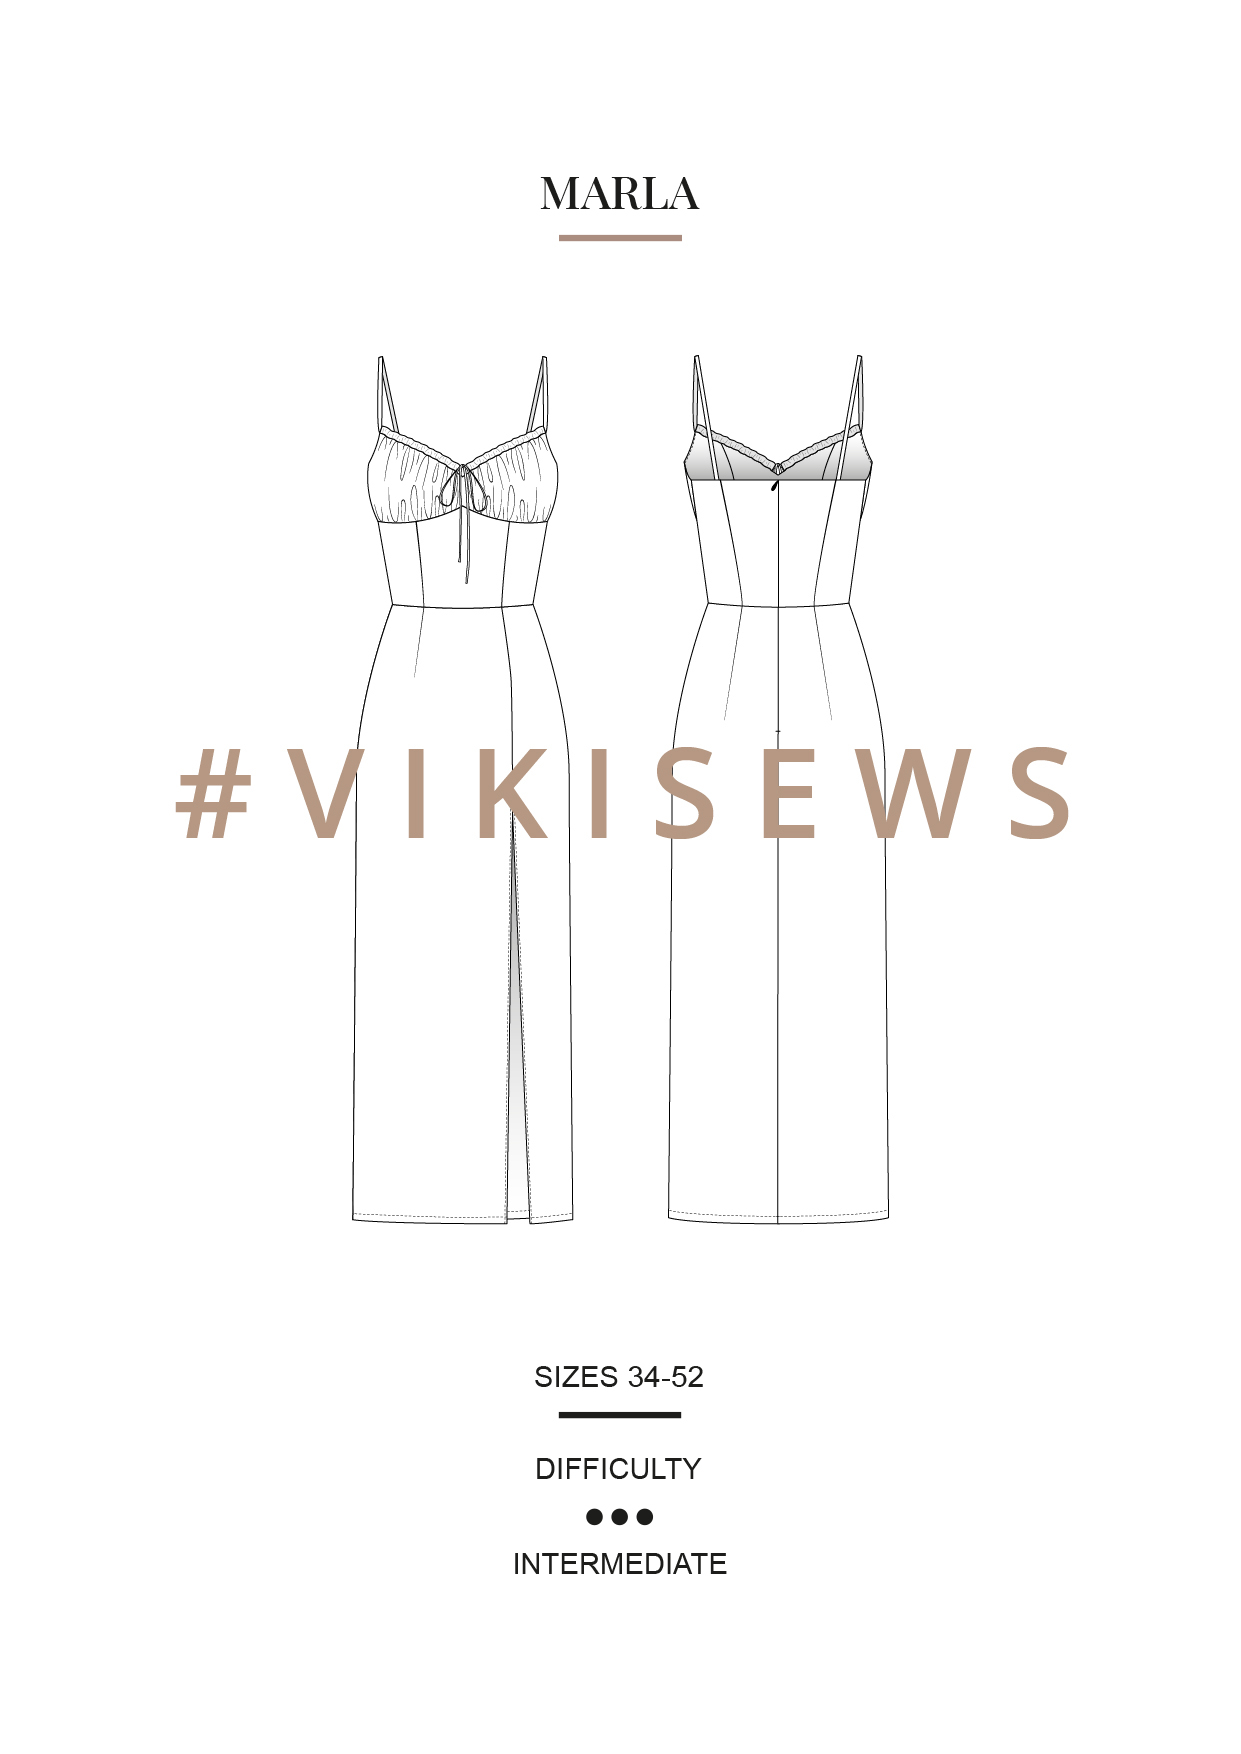 Vikisews Marla Dress - The Fold Line